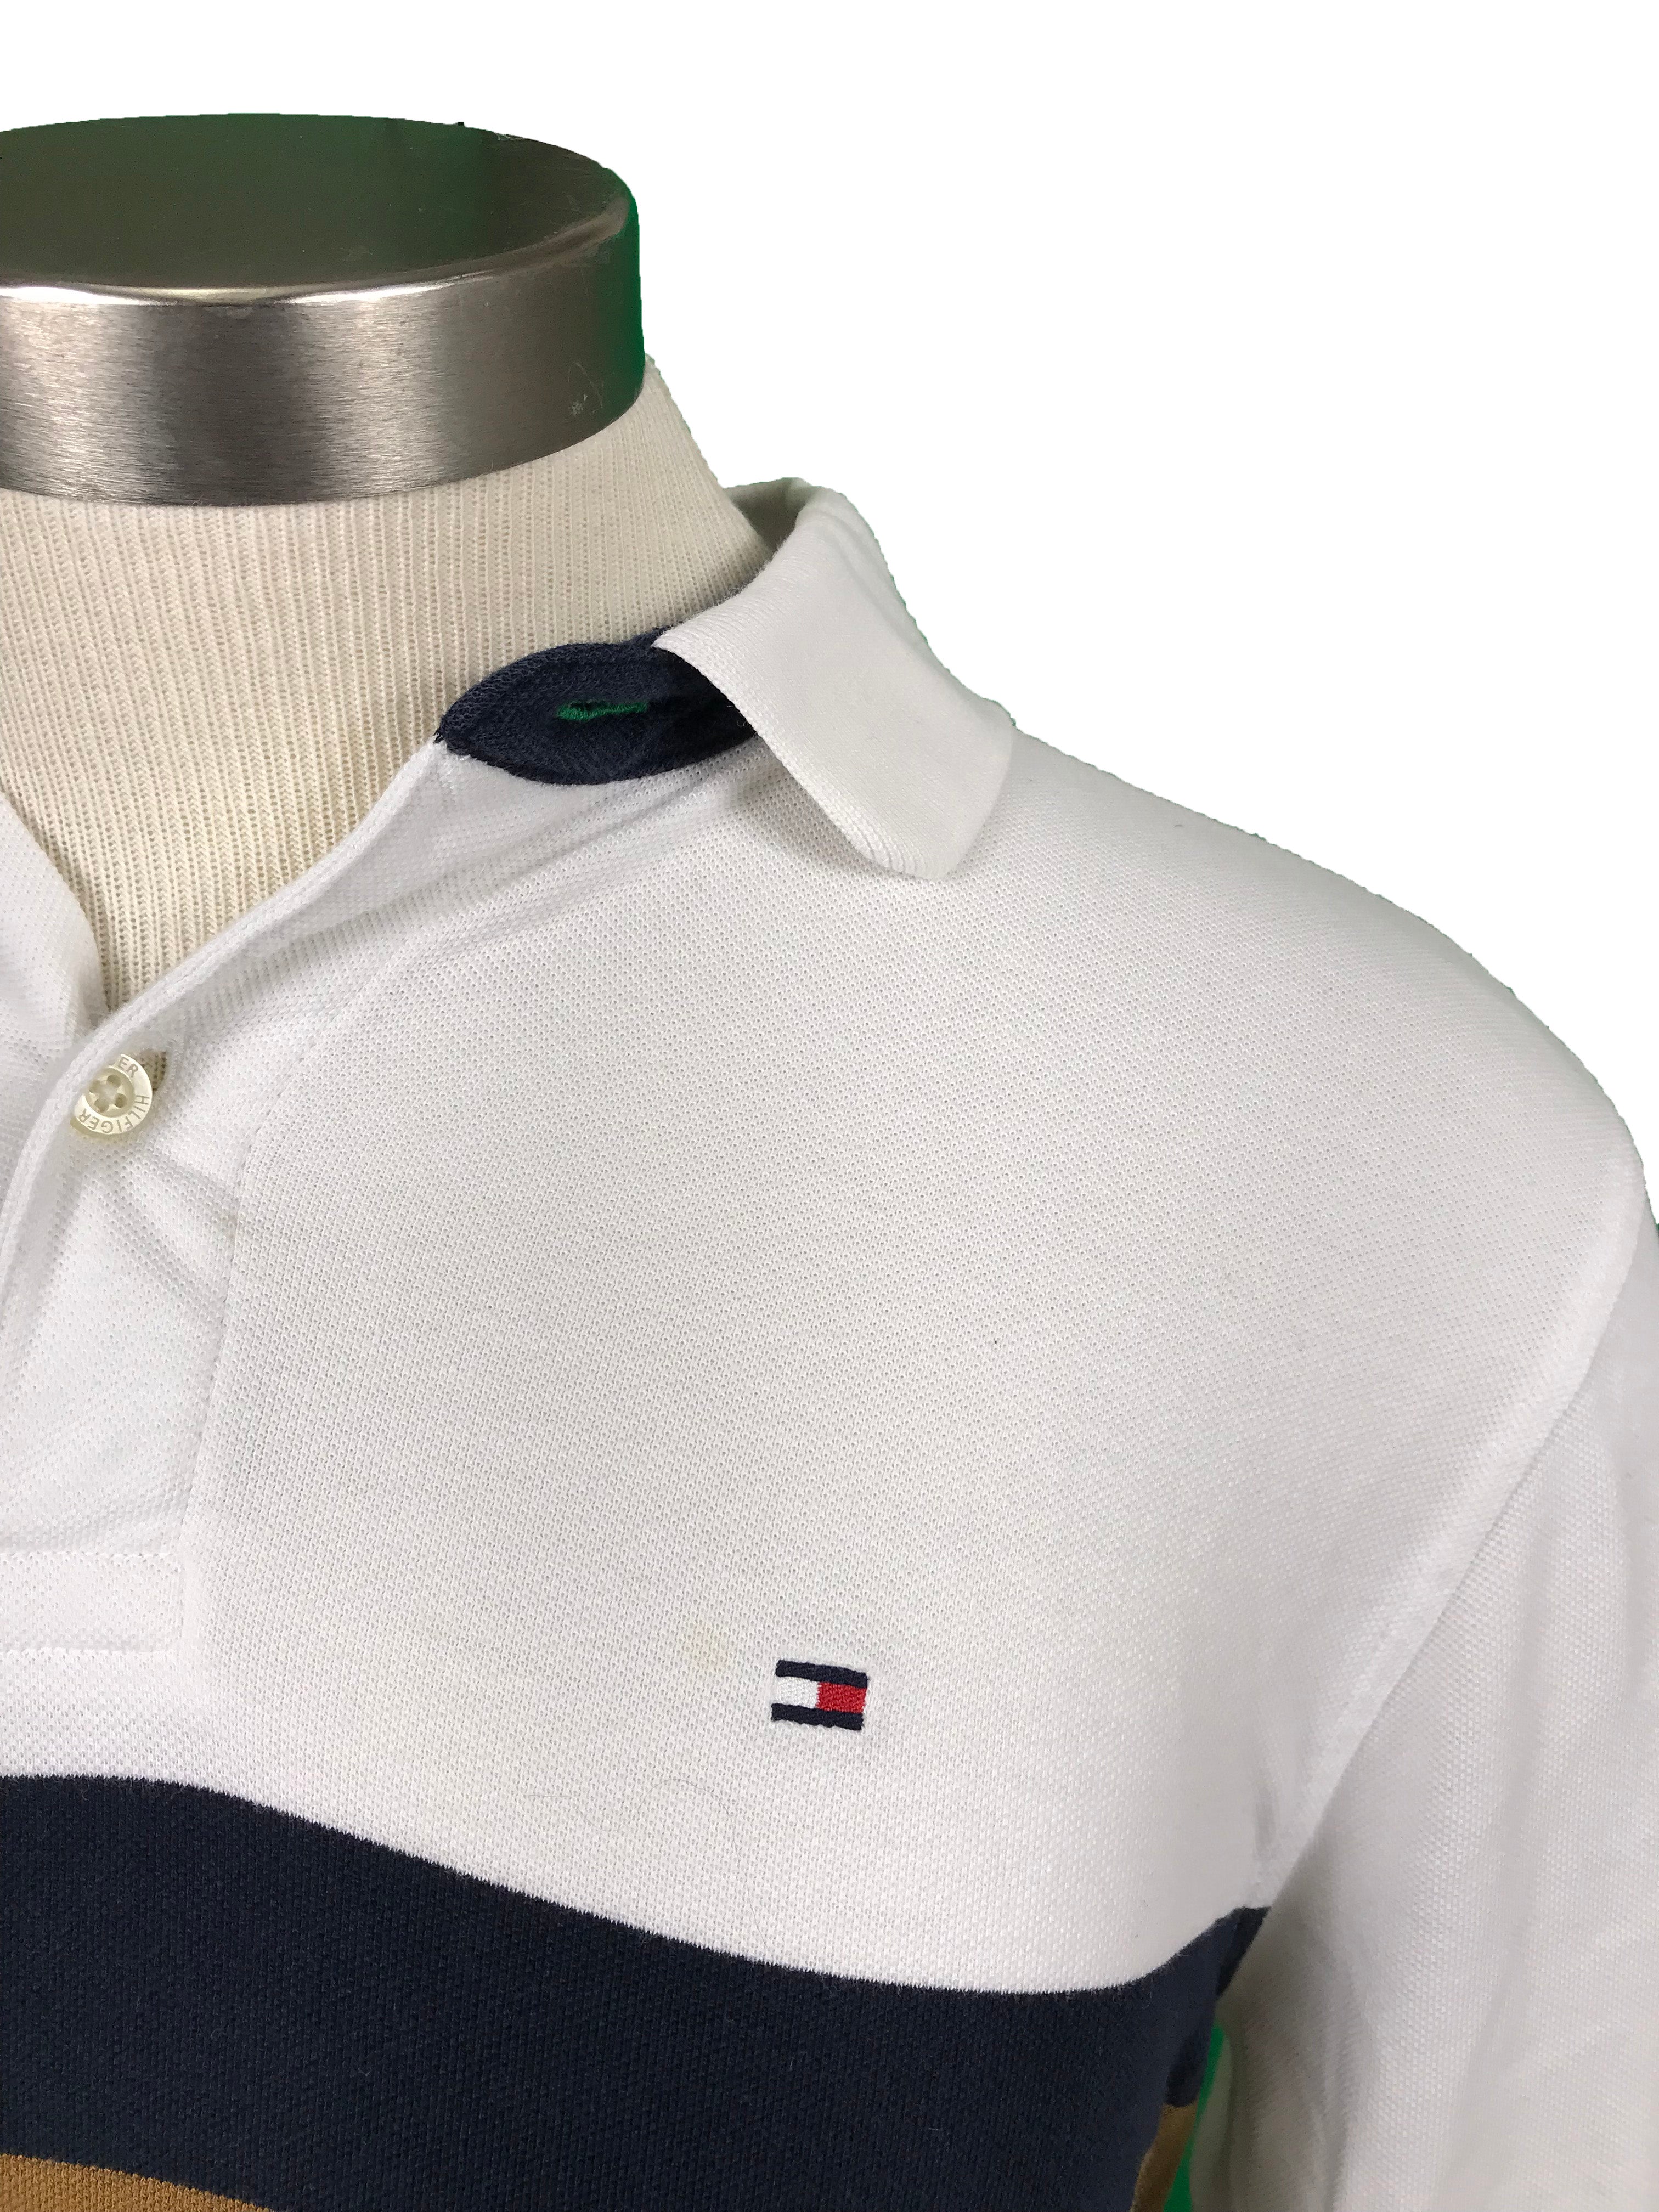 Tommy Hilfiger White Long-Sleeve Polo Men's Size Medium